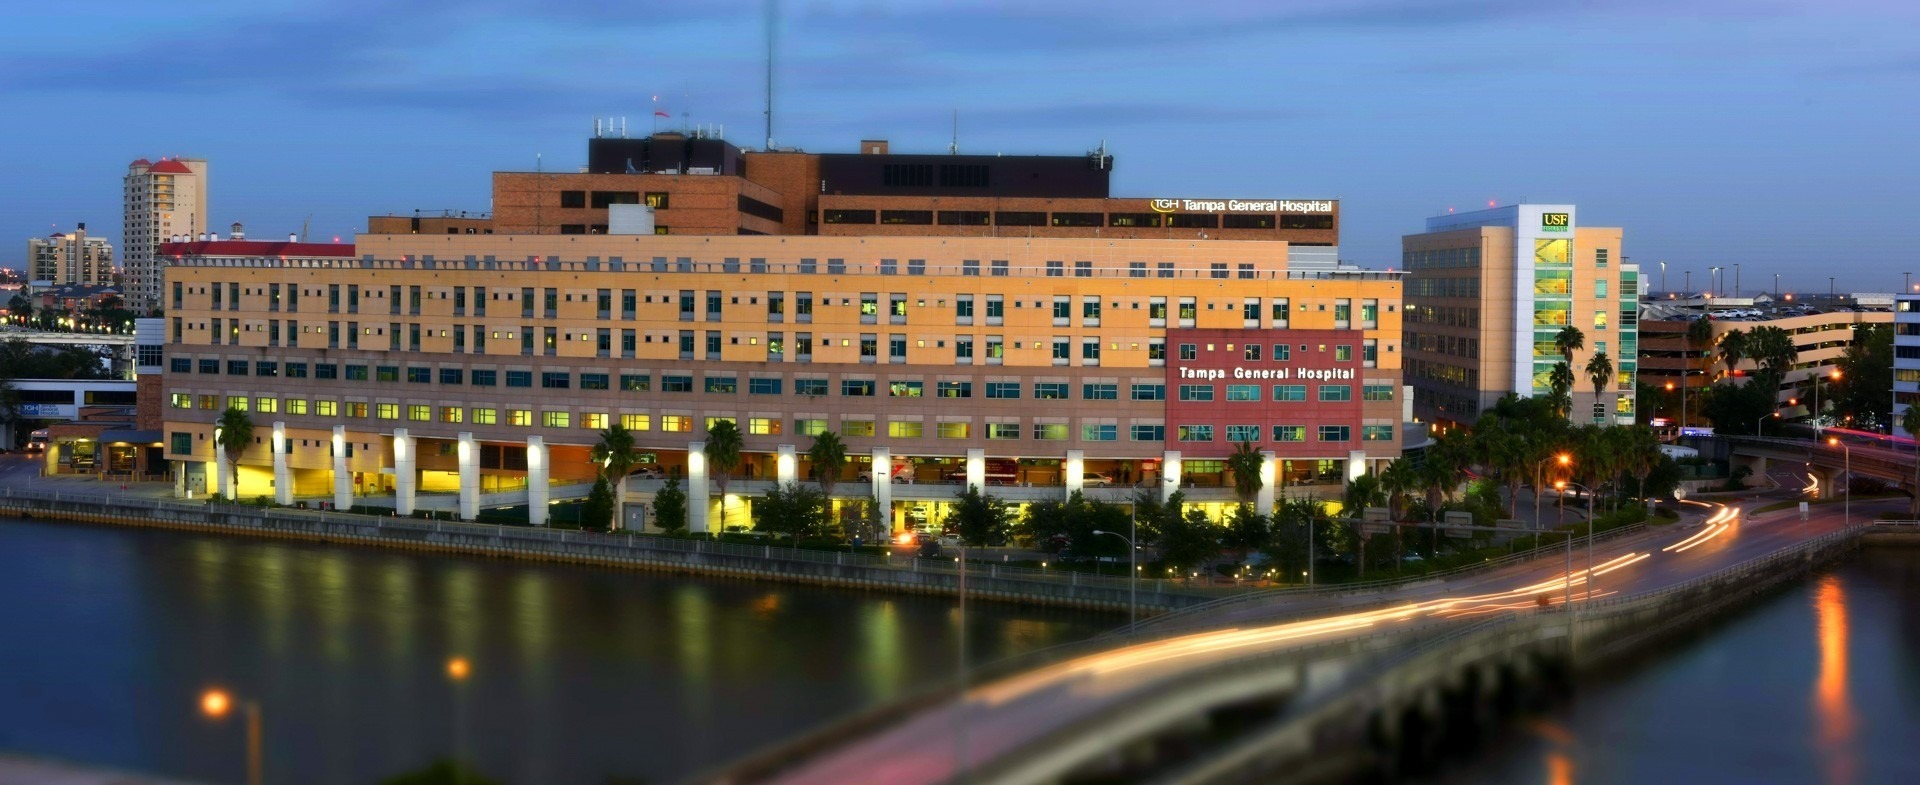 Best Hospital in Tampa Metro U.S. News | Tampa General Hospital